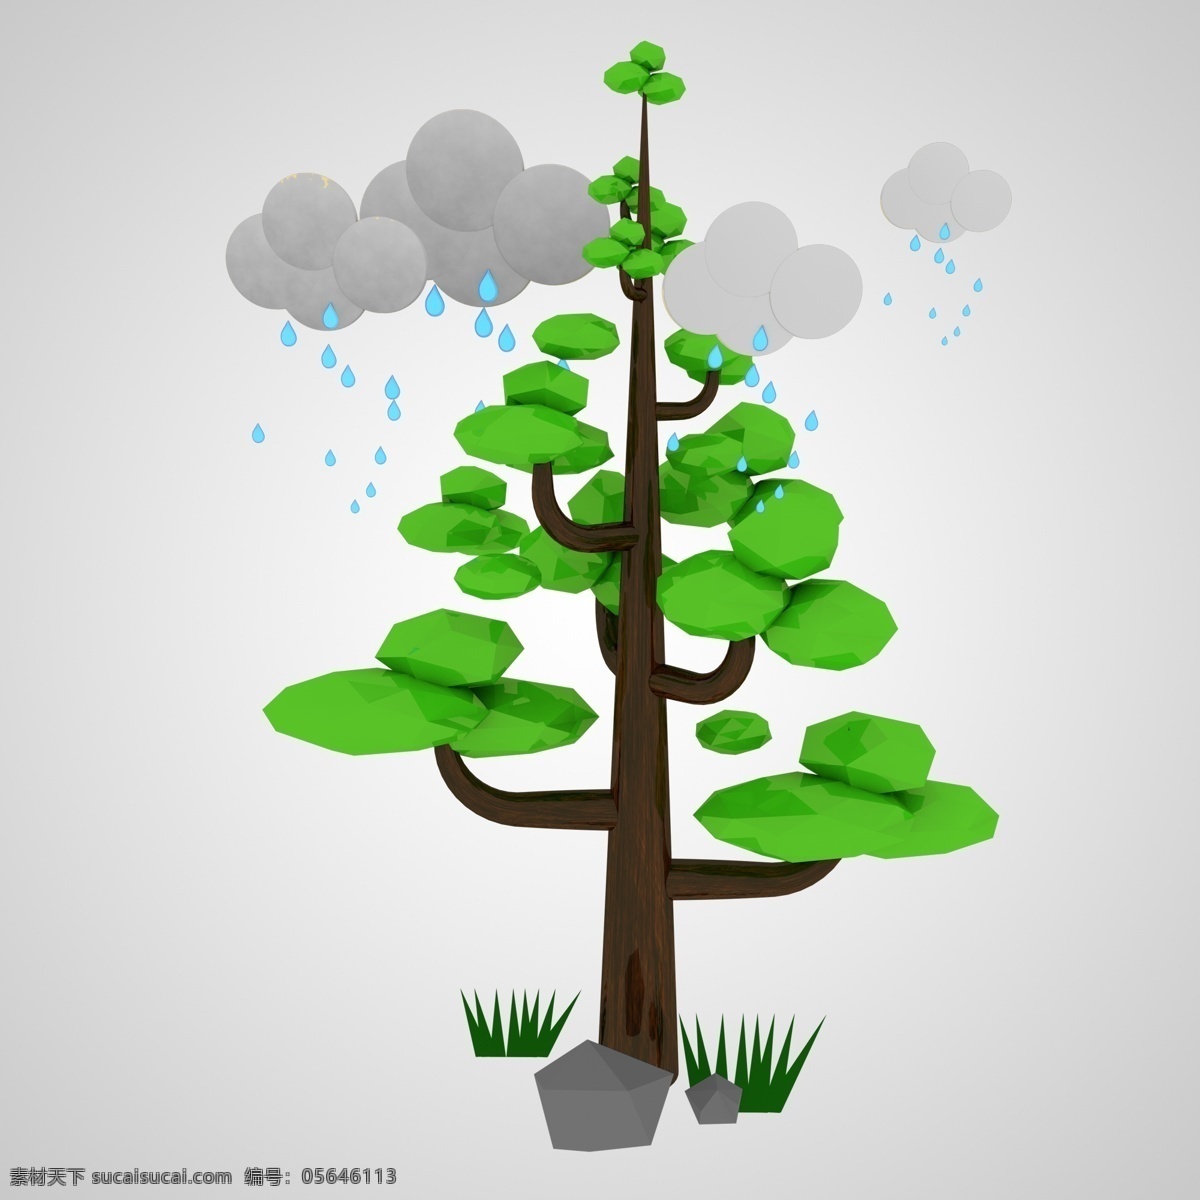 3d 树 植物 卡通 商务 元素 办公 创意 卡通树 可爱 高清 绿植 3d树模型 立体树 商务元素 商用素材 创意树 几何体 多面体 扁平化 果树 写实 景观 原创psd 云杉树 下雨